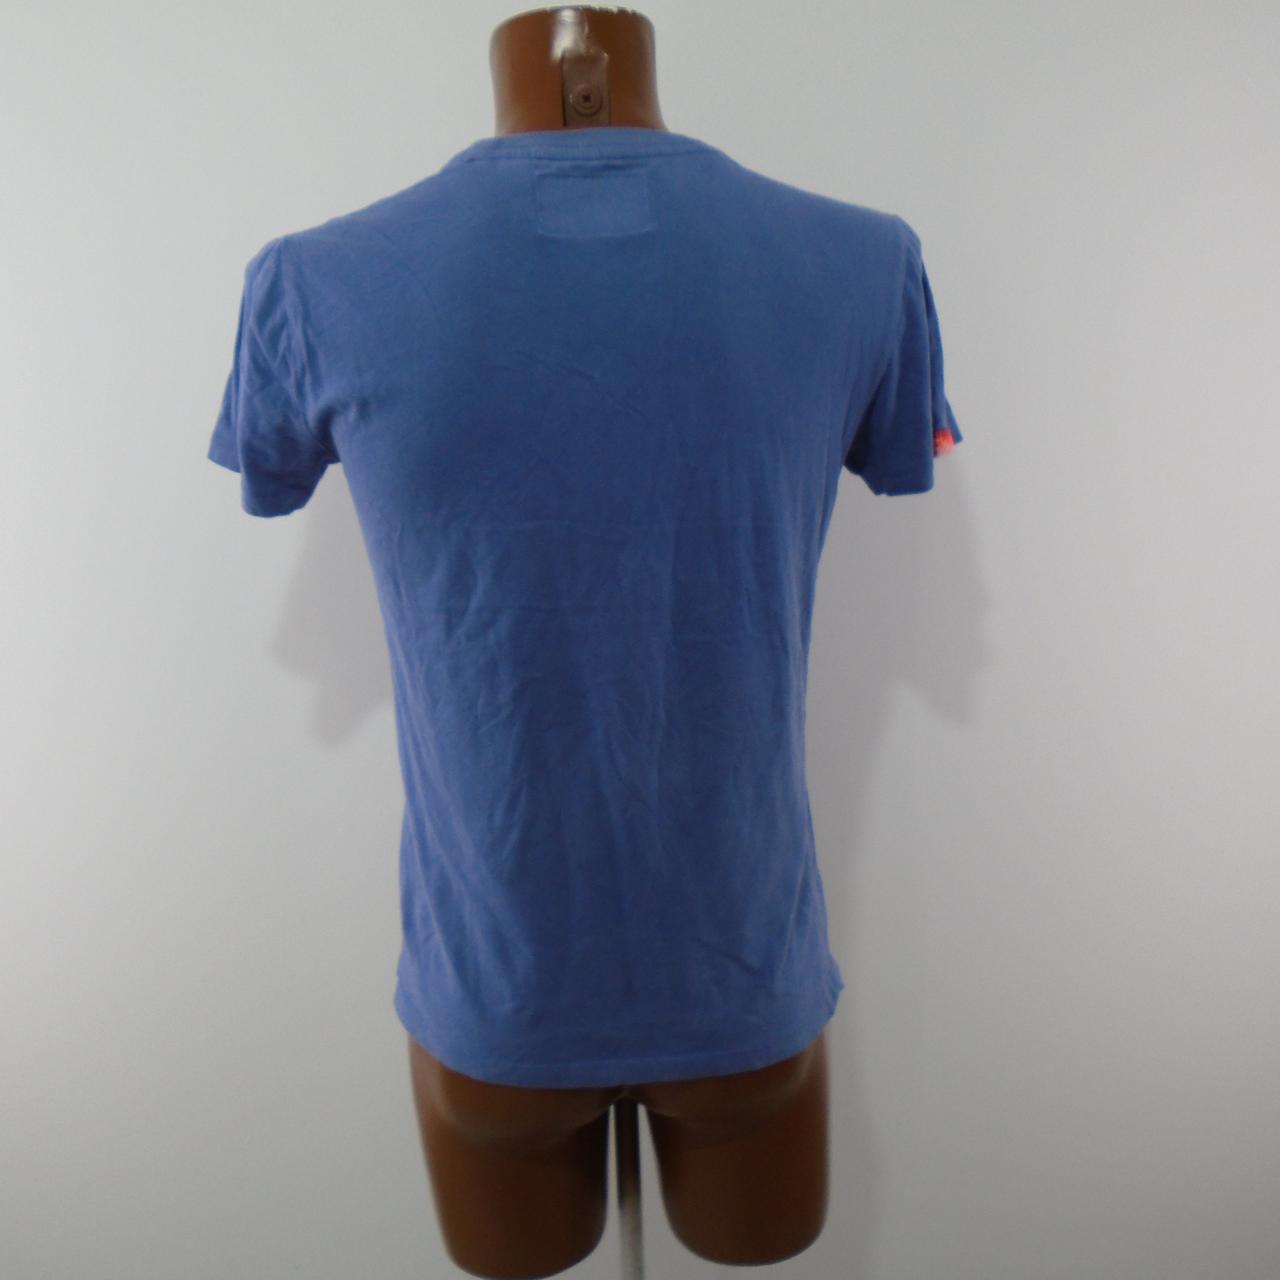 Camiseta Hombre Superdry. Azul. S. Usado. Bien